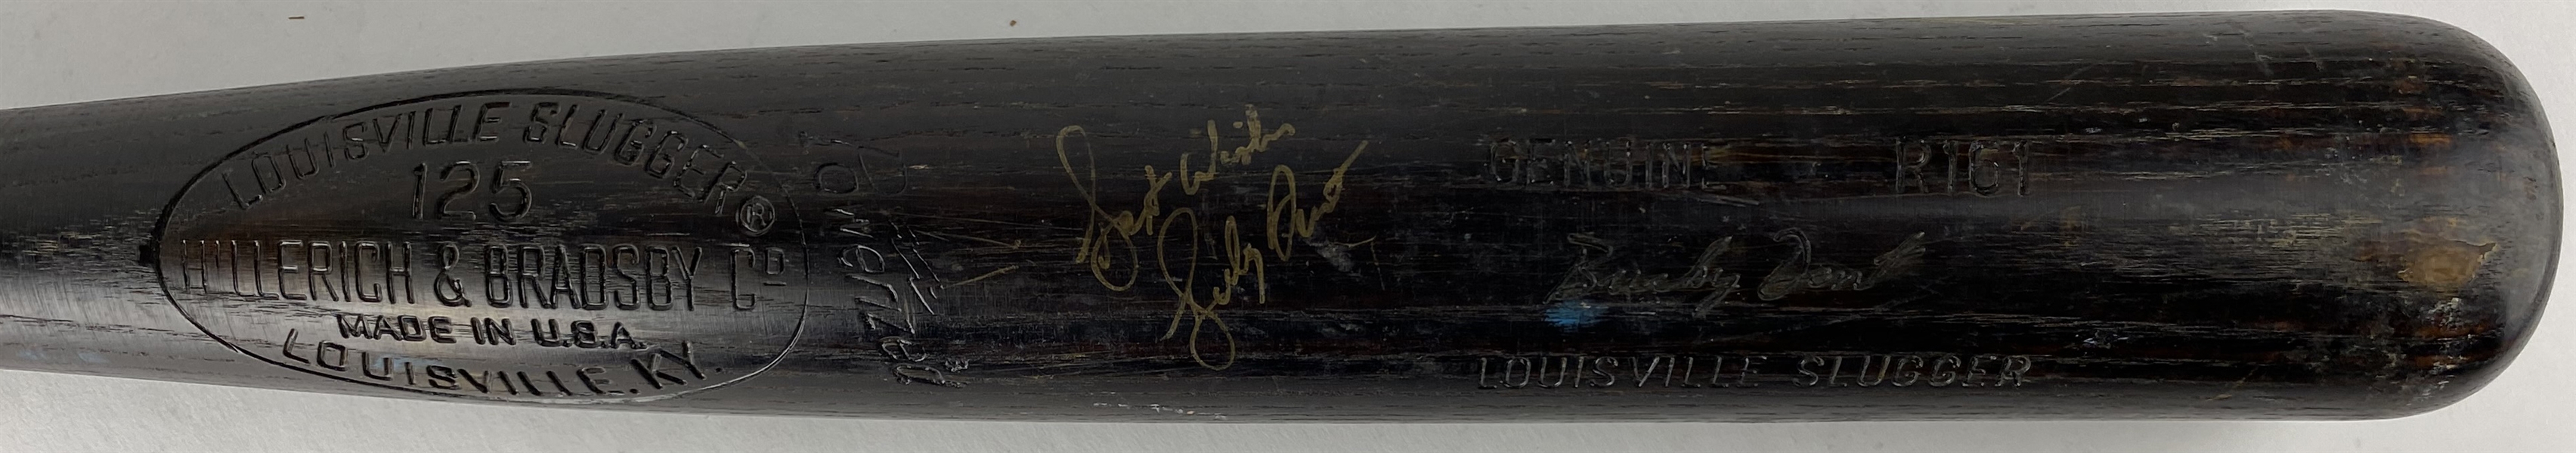 Bucky Dent Signed & Game Used 1977-1979 Baseball Bat - PSA/DNA GU 8